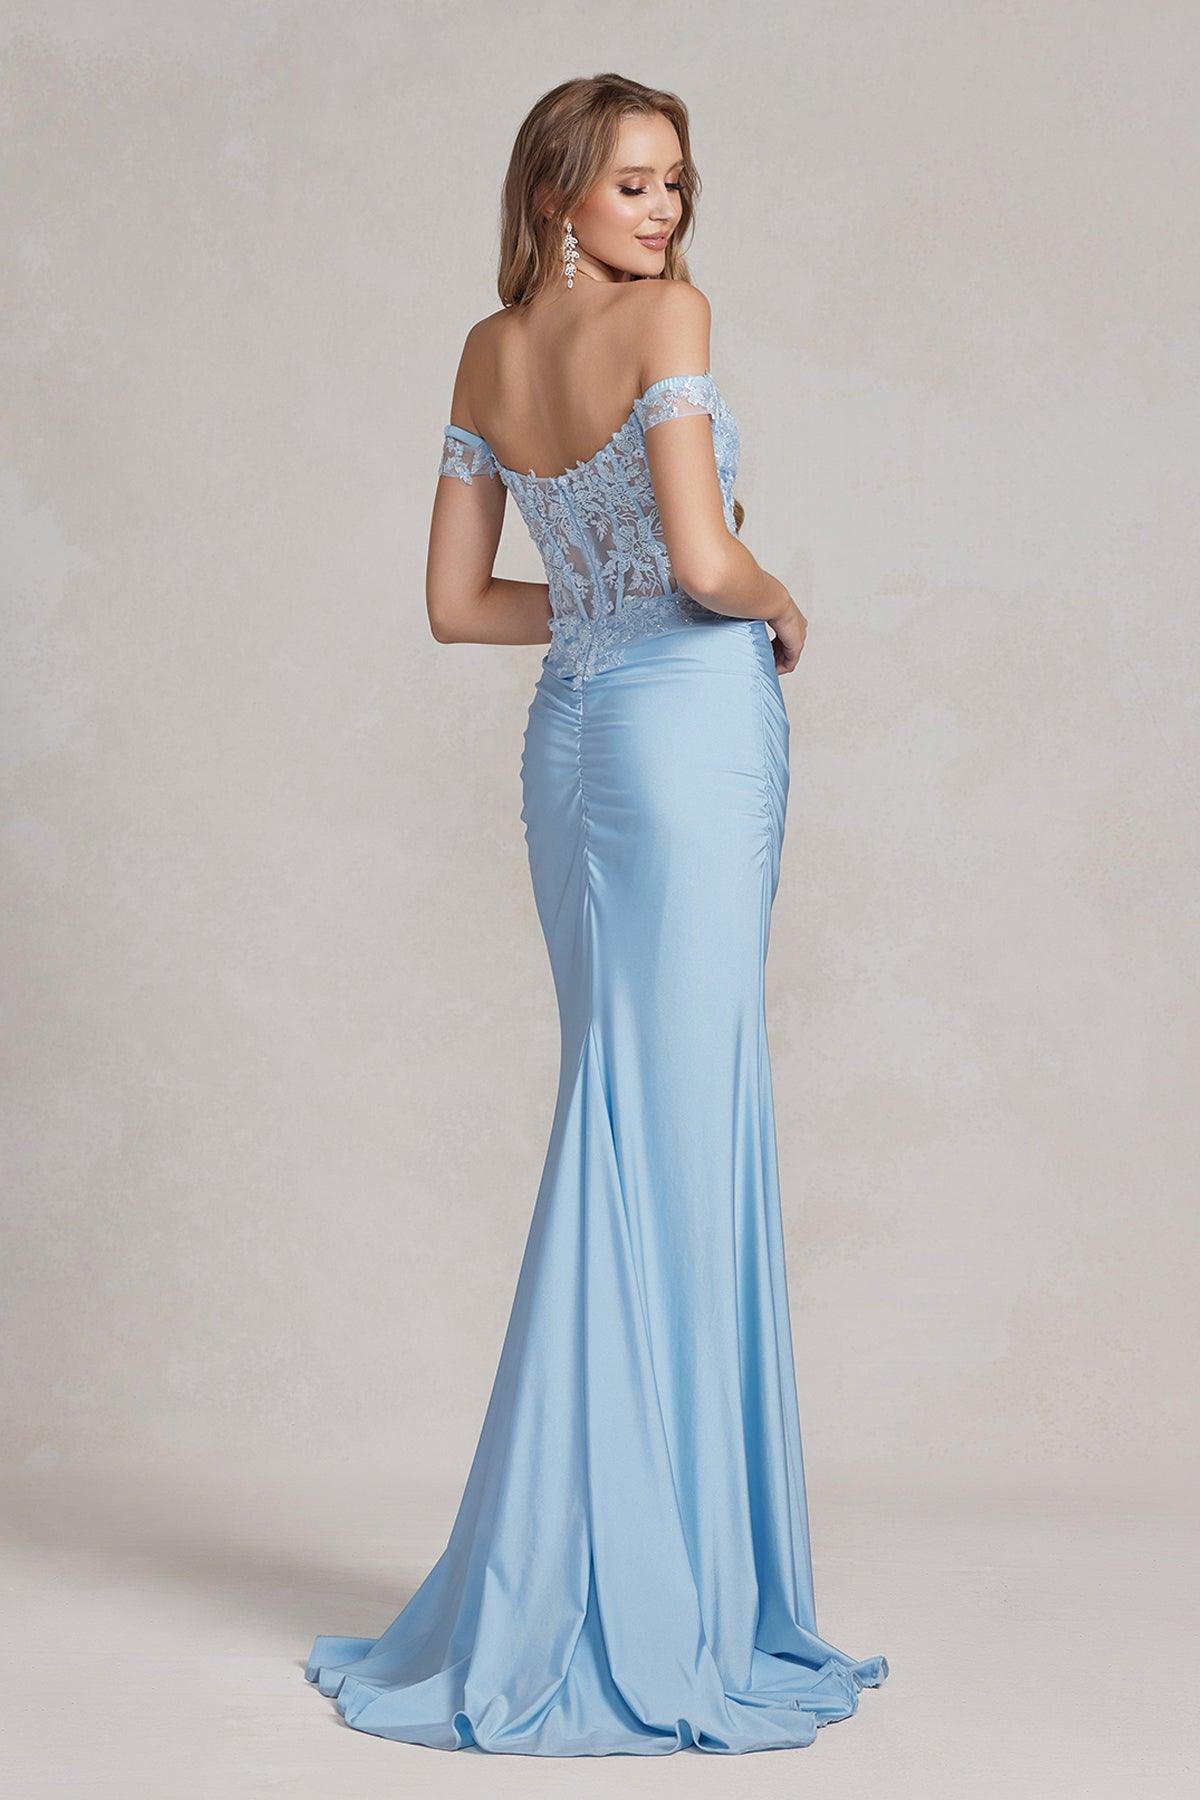 Nox Anabel E1184 Long Off Shoulder Prom Dress